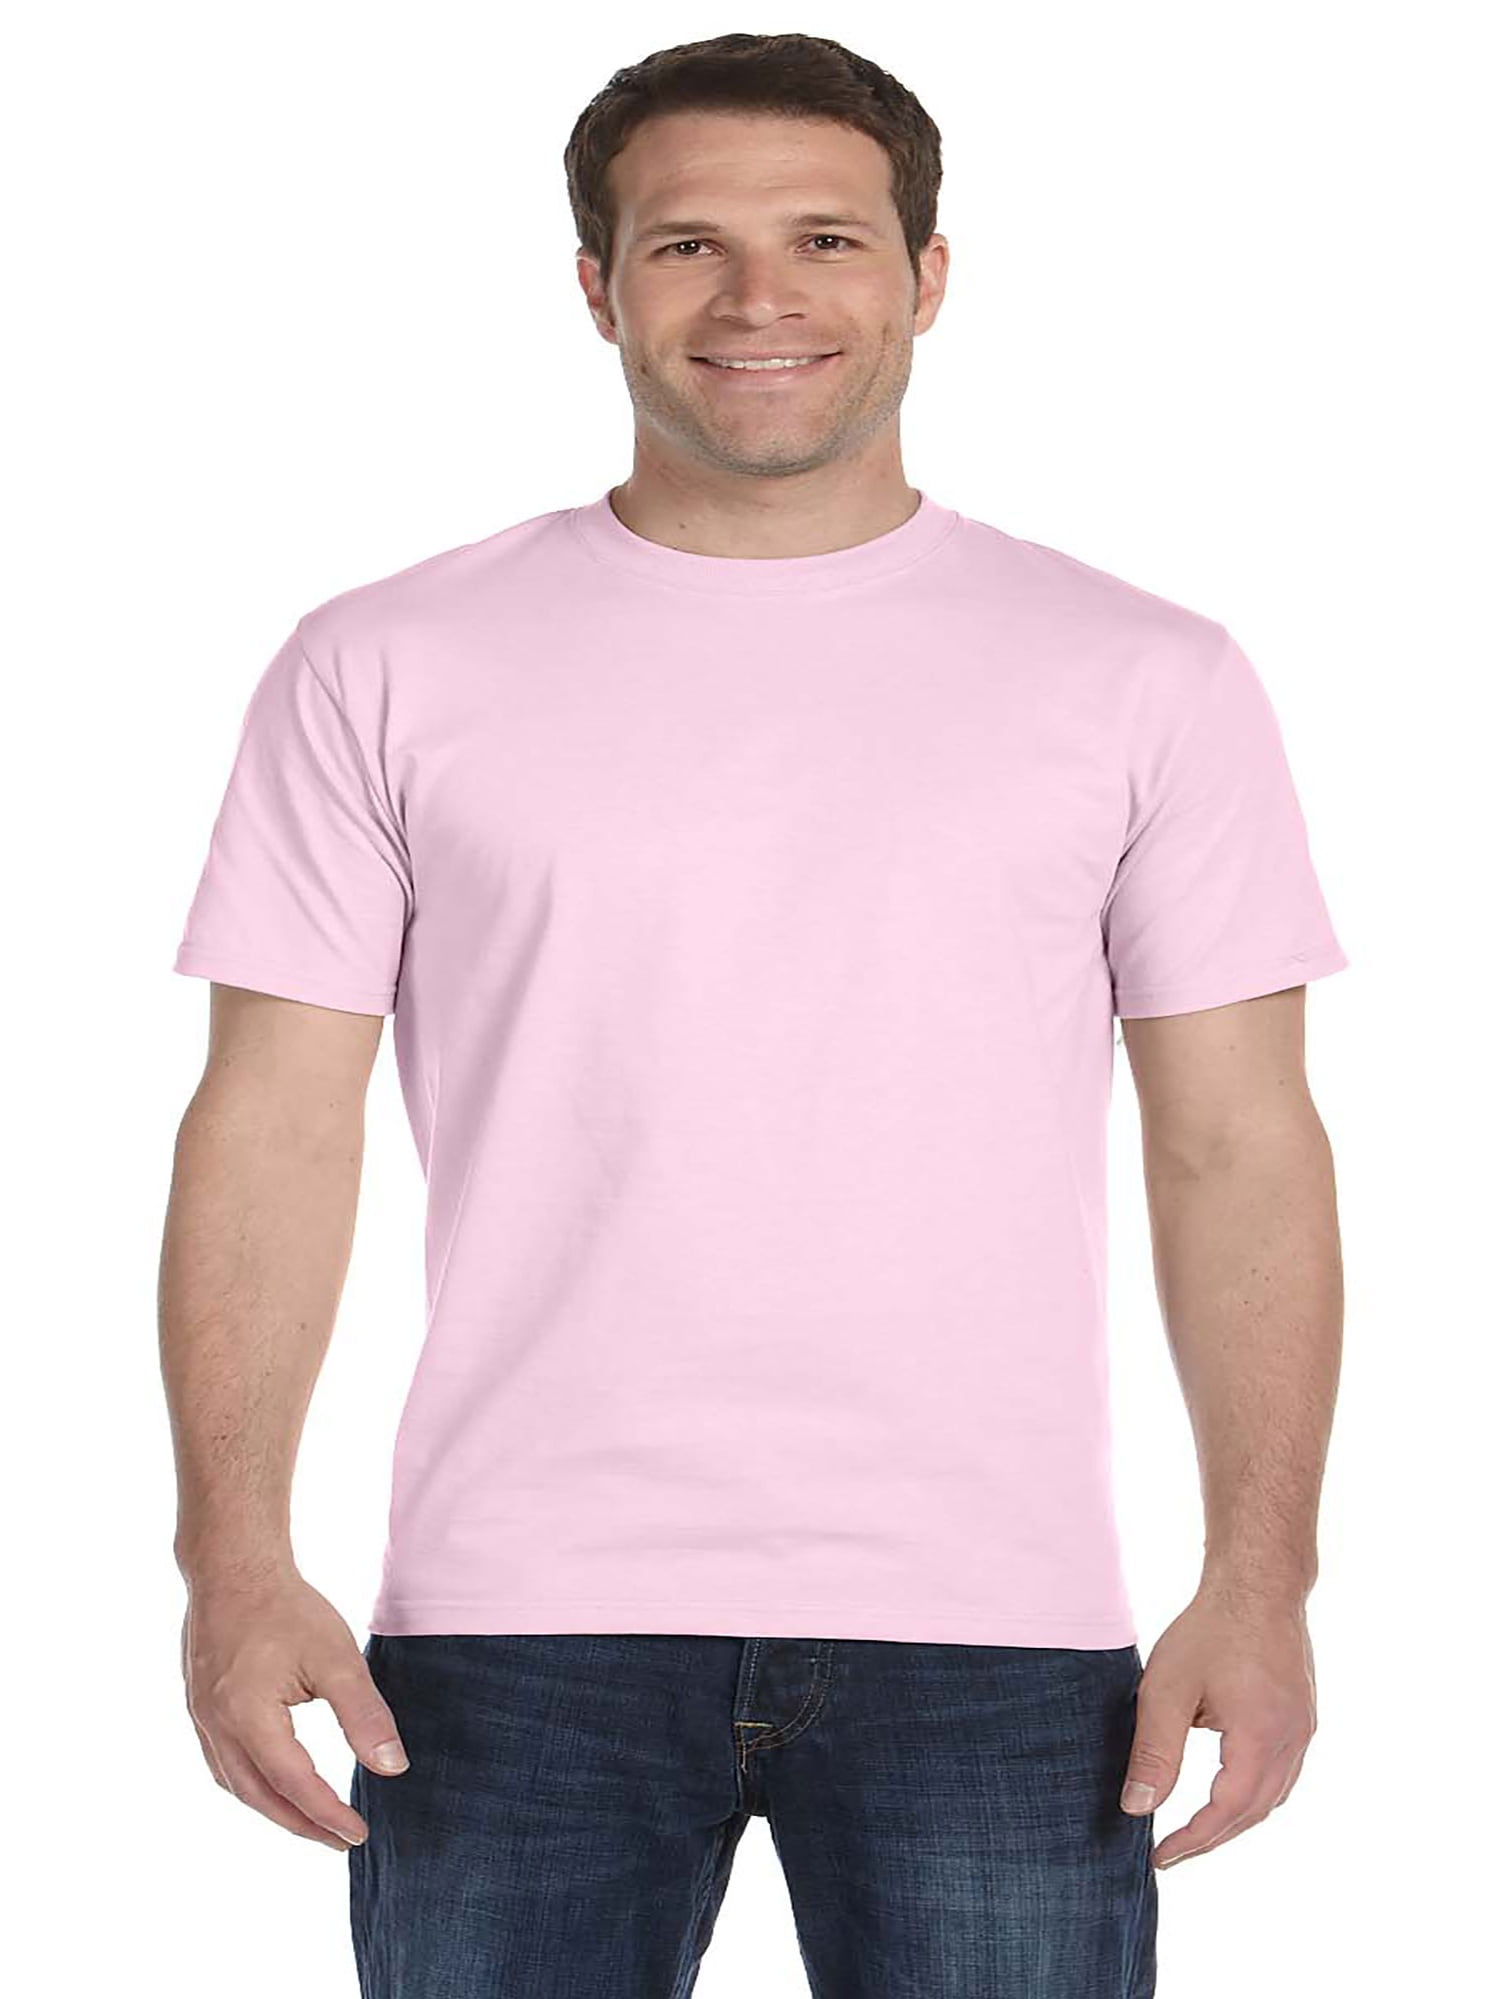 Hanes - Hanes Men's Beefy-T Crewneck T-Shirt, Style 5180 - Walmart.com ...